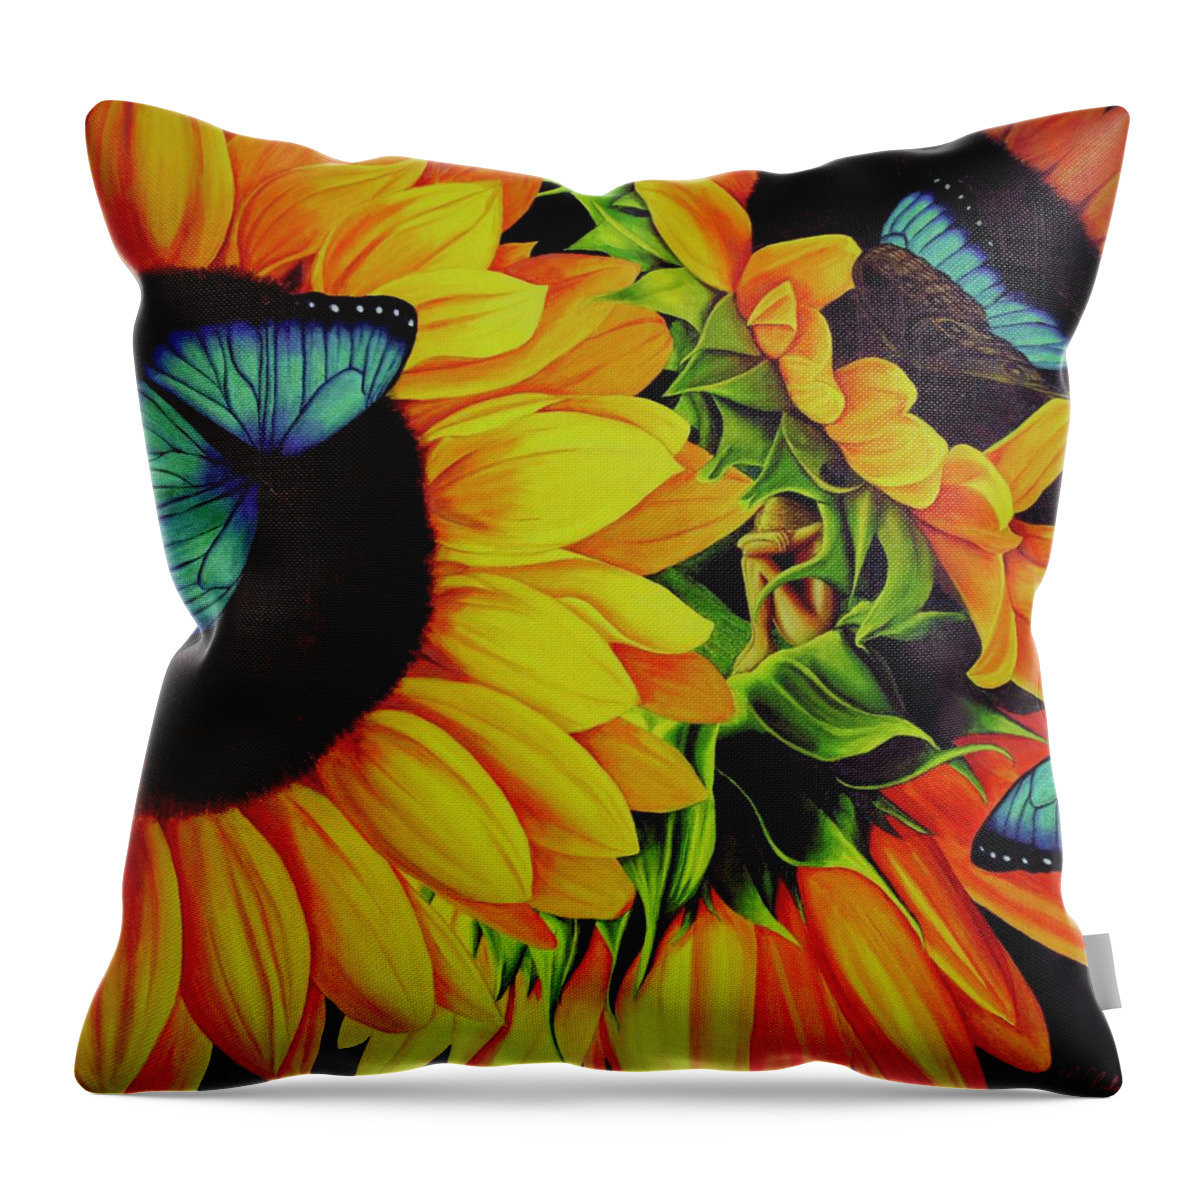 Kim Mcclinton Throw Pillow featuring the painting Blue Morpho Sunflower Dream by Kim McClinton